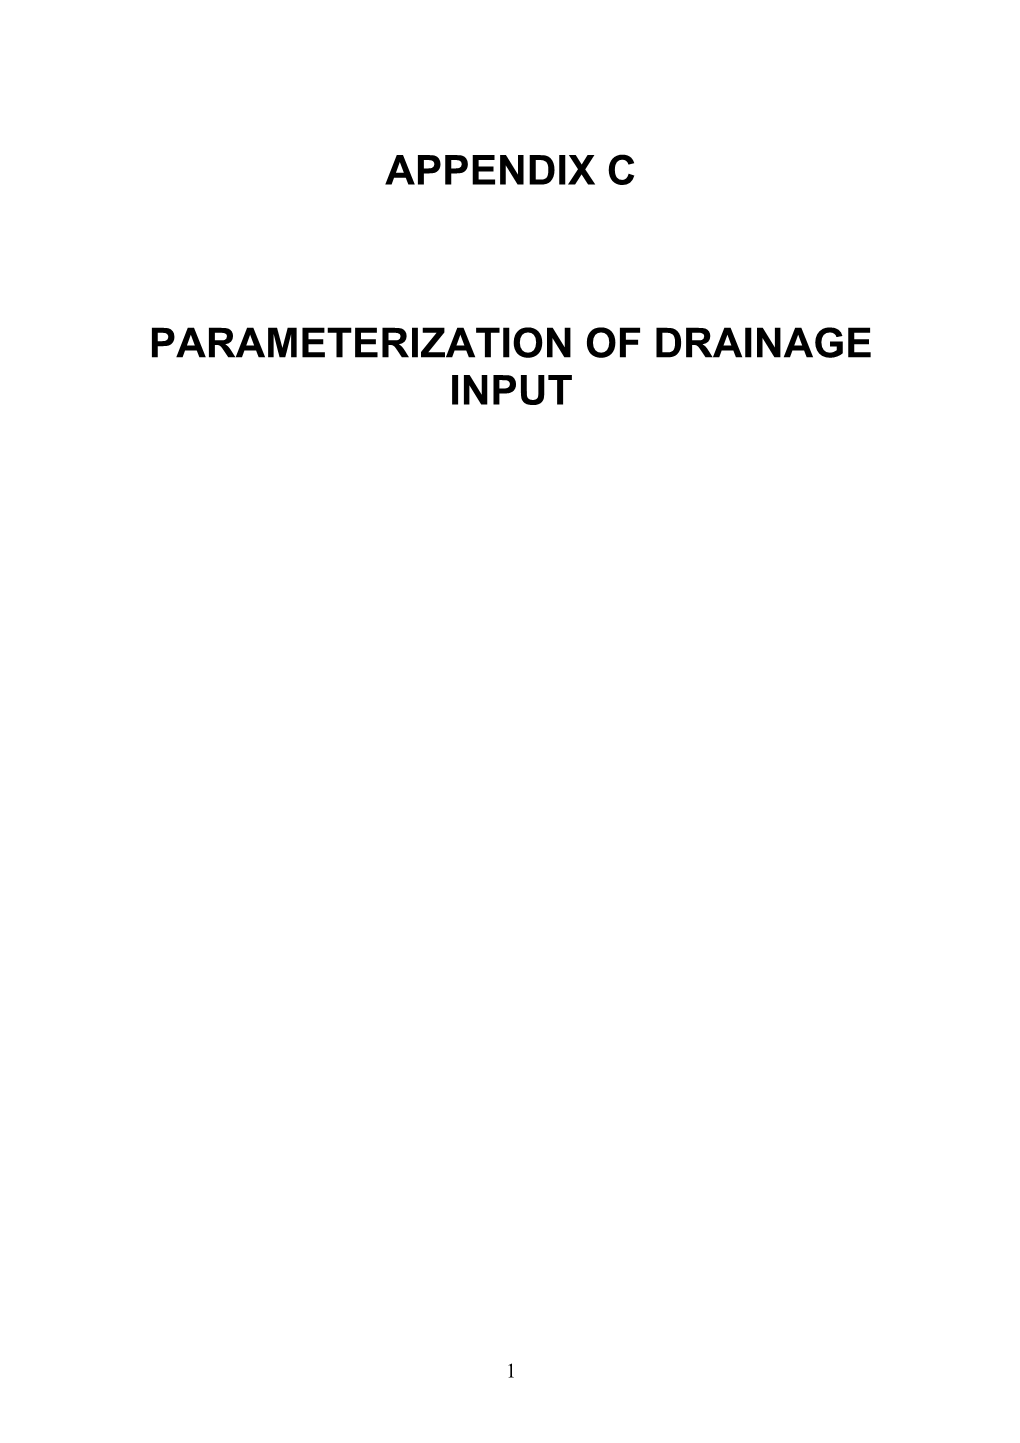 Parameterization of Drainage Input